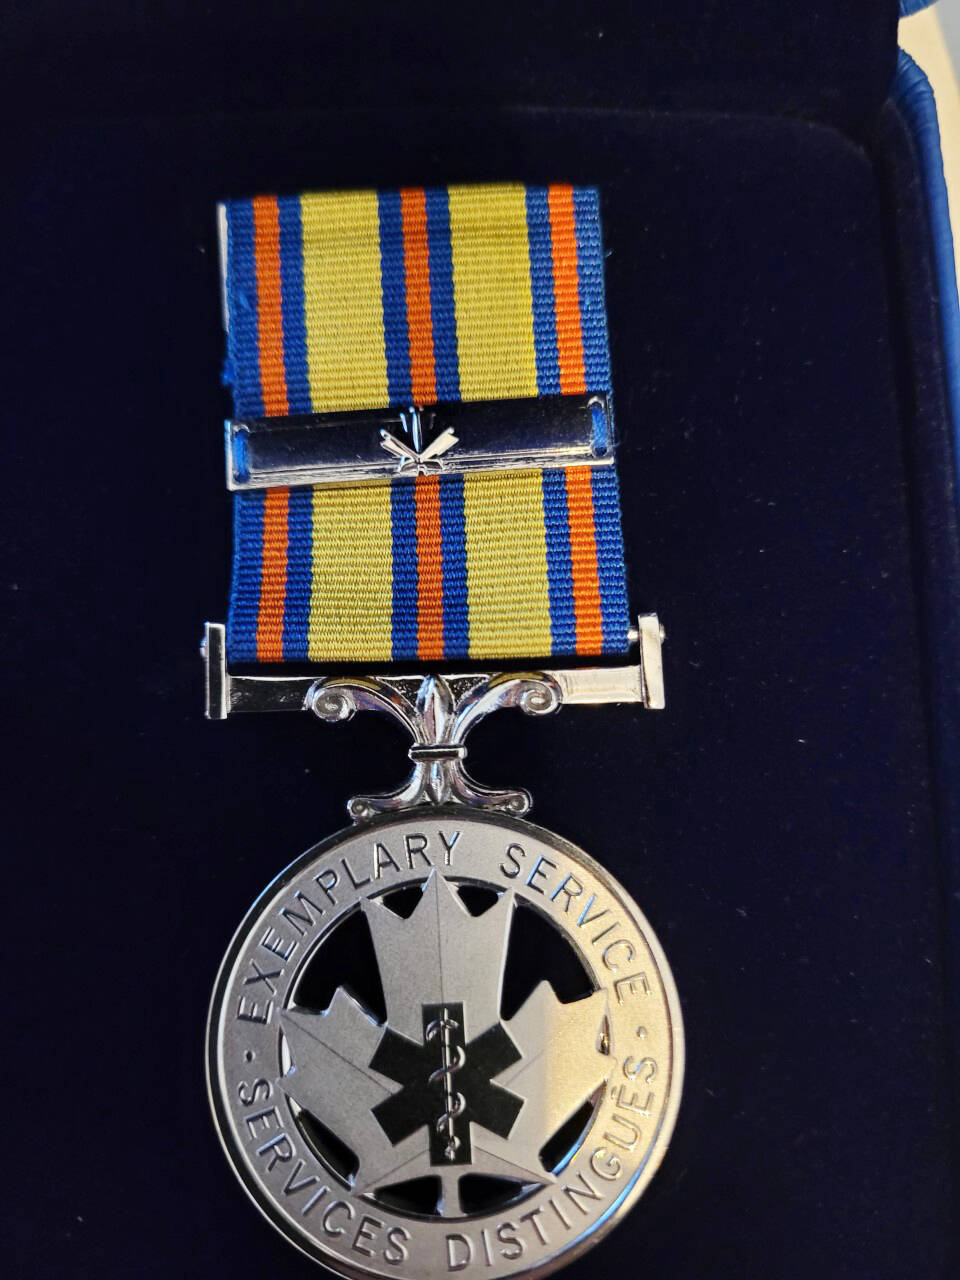 Close up of Bruce Moffats service medal. Photo: Submitted